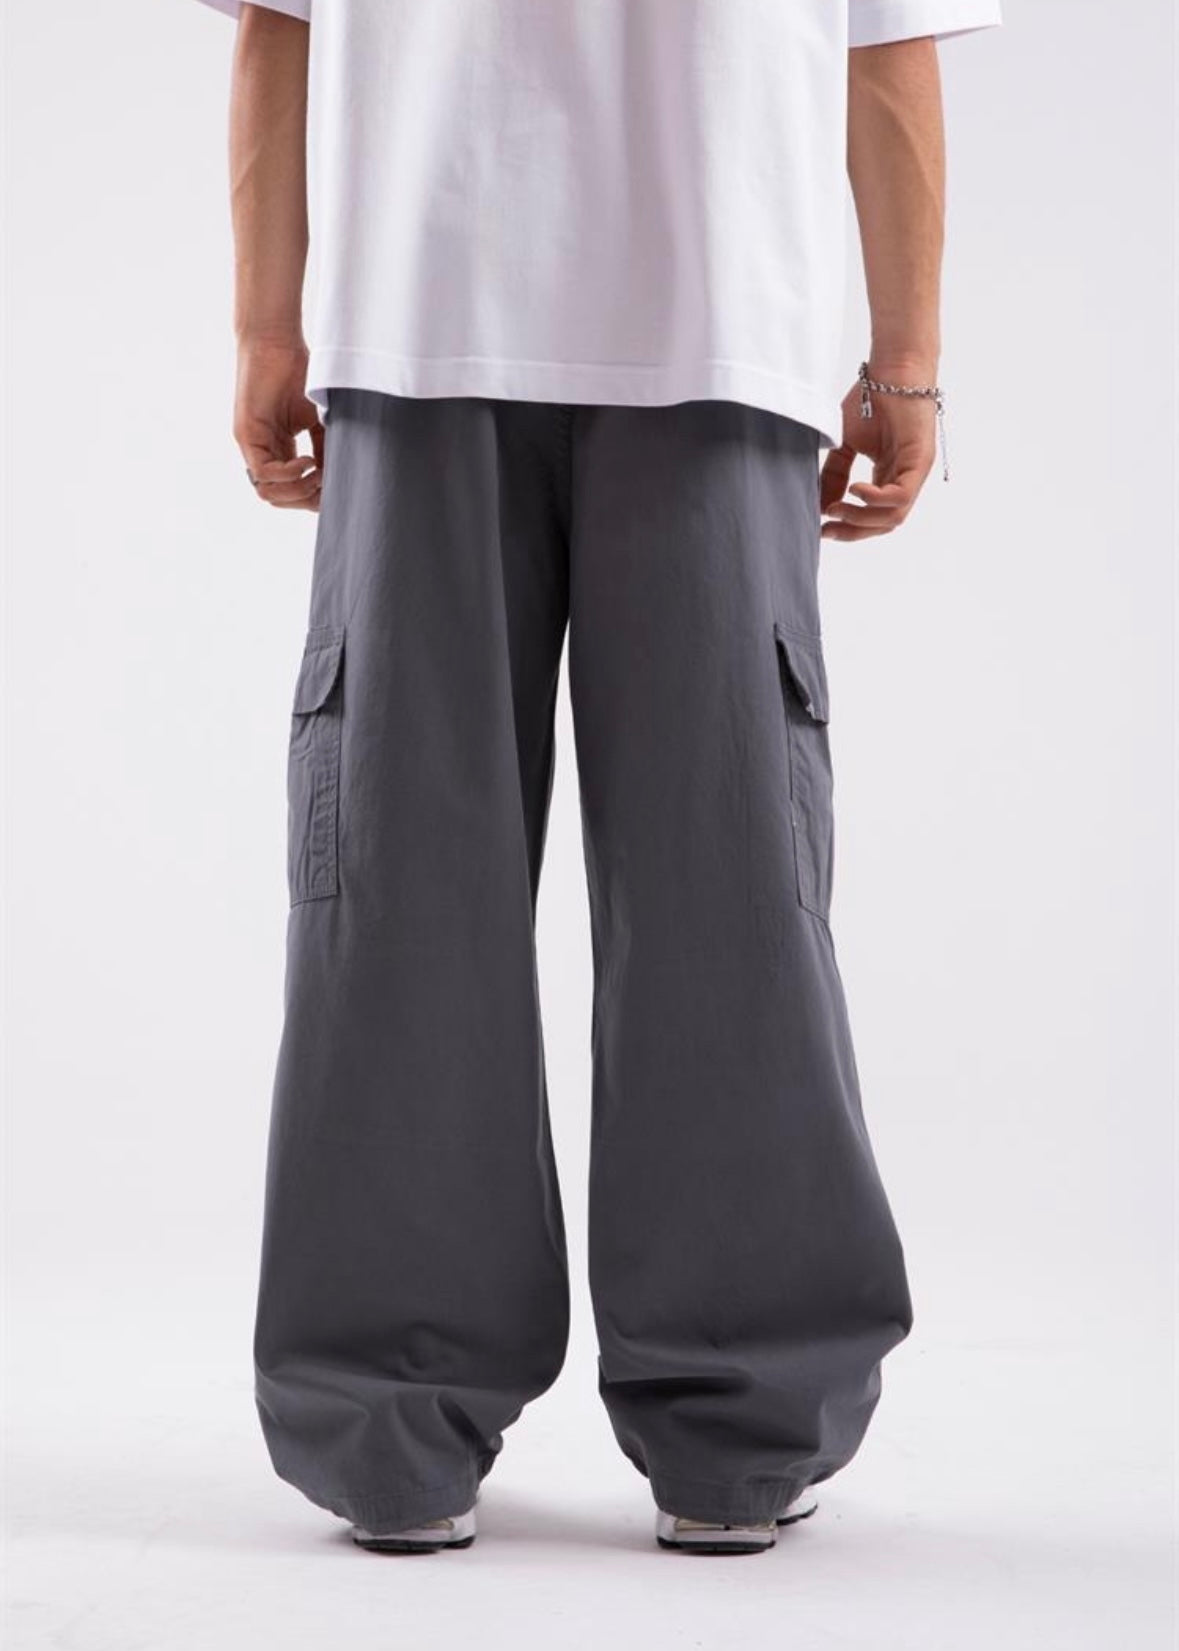 Adjustable Smoked Grey Pocket Pants - Clothing Lab